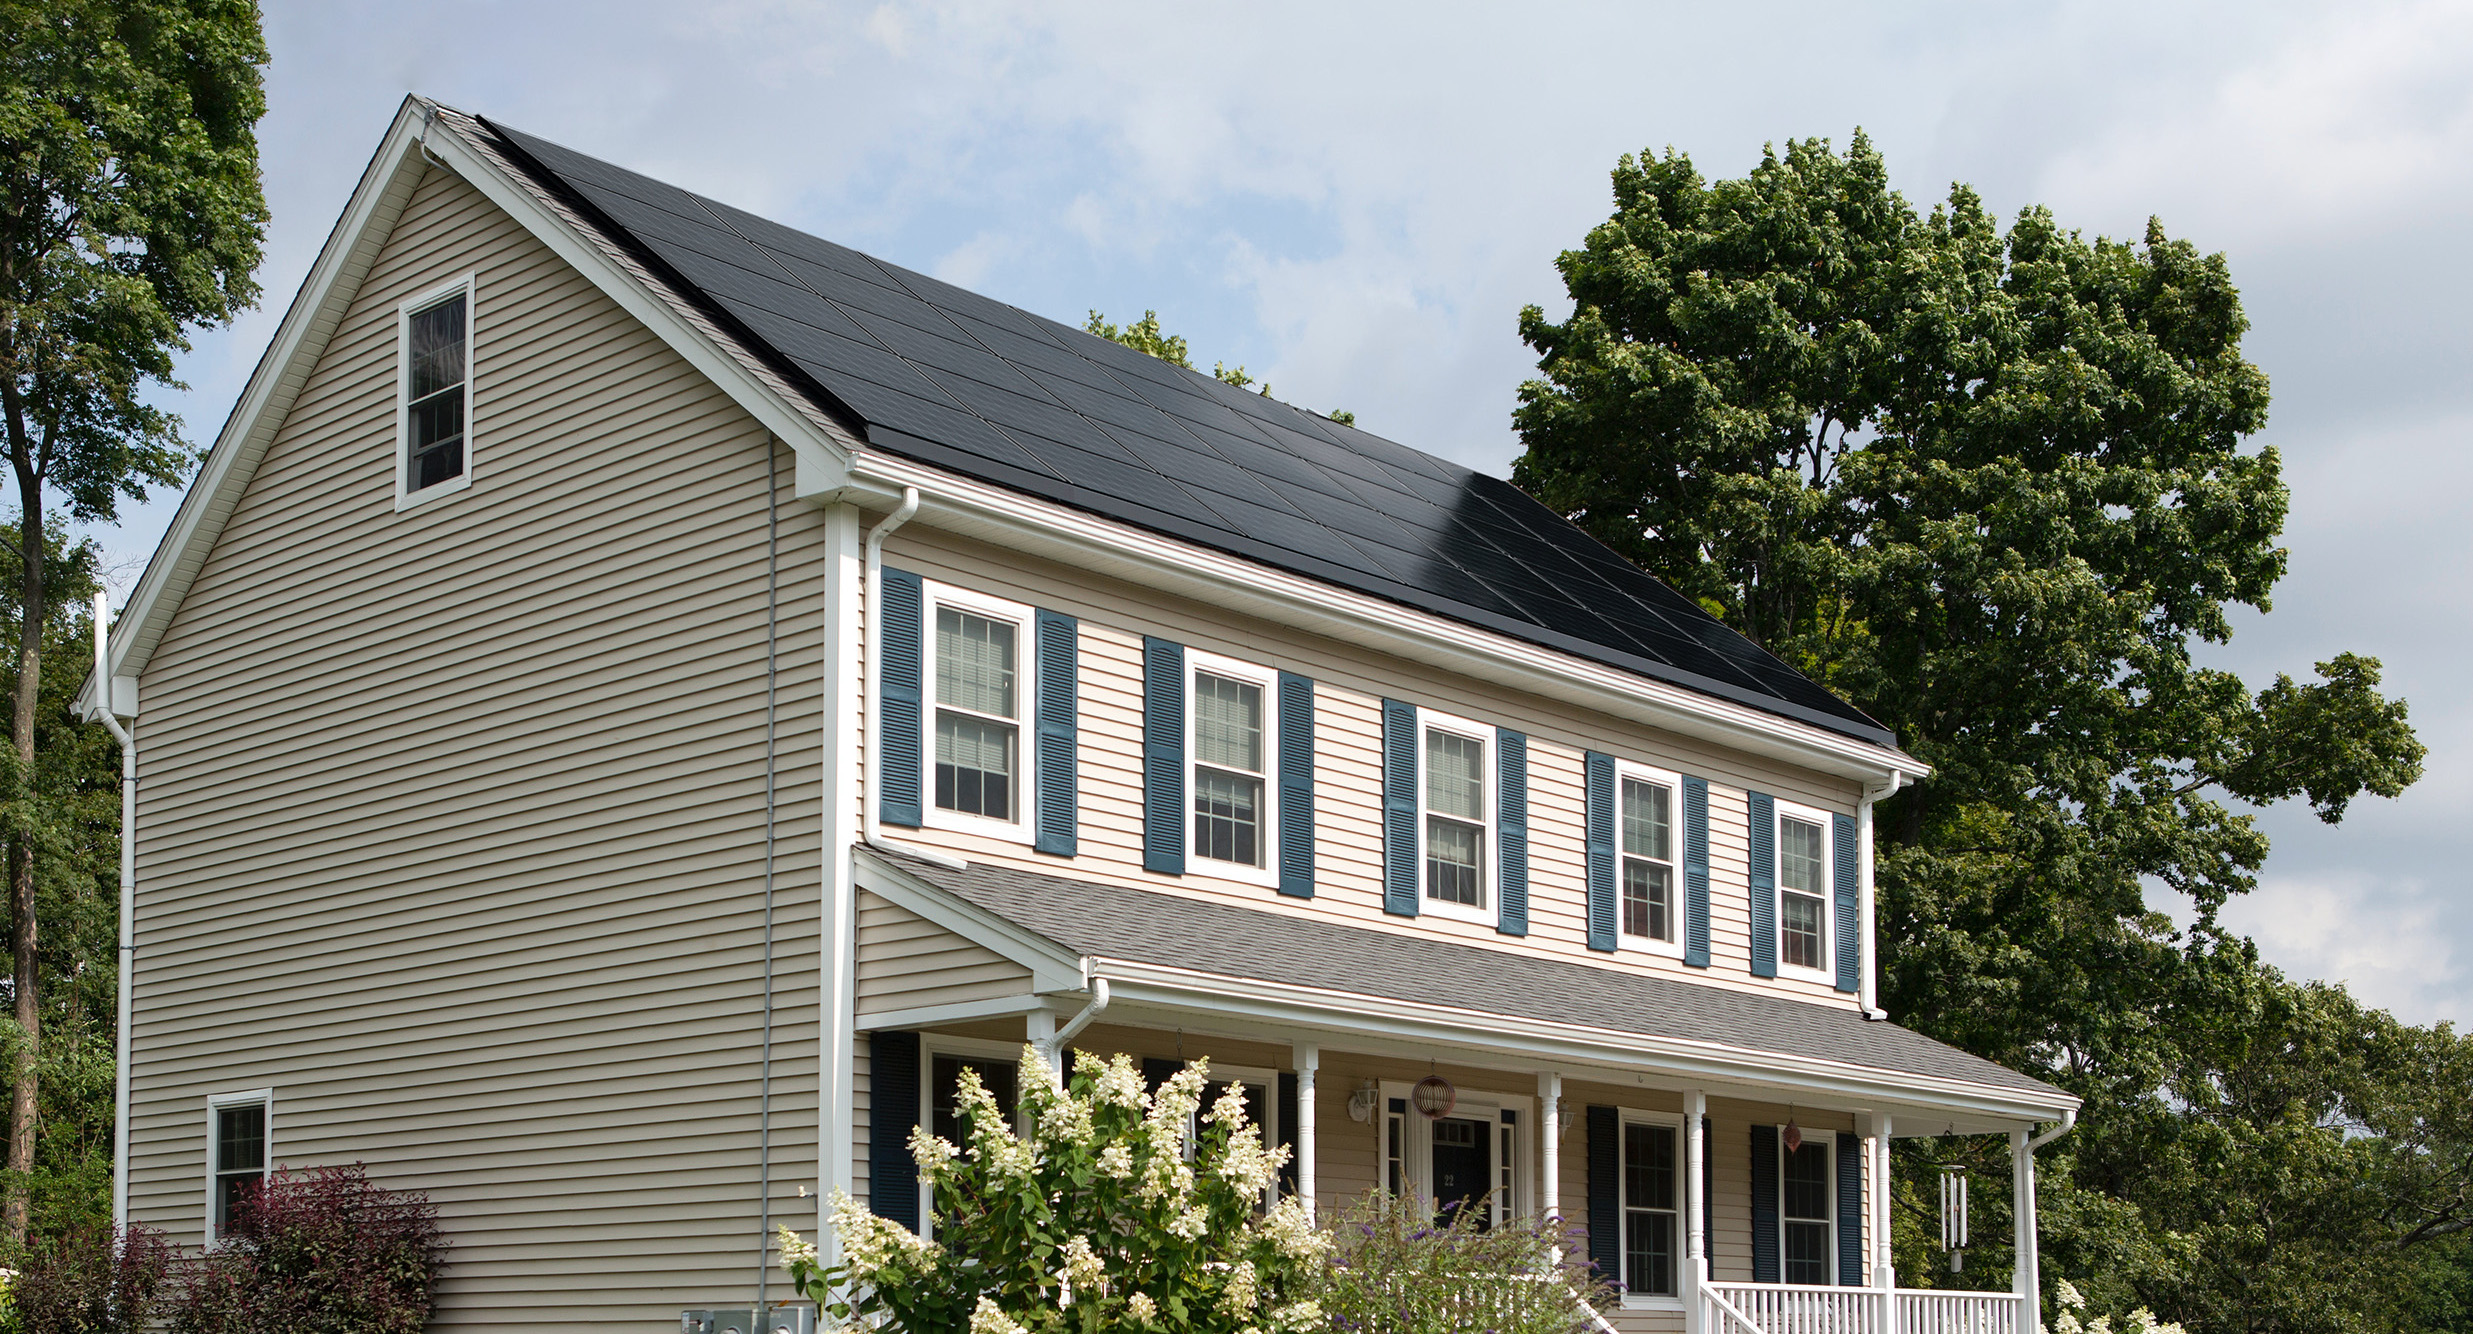 Vivant Smart home exterior with solar panels